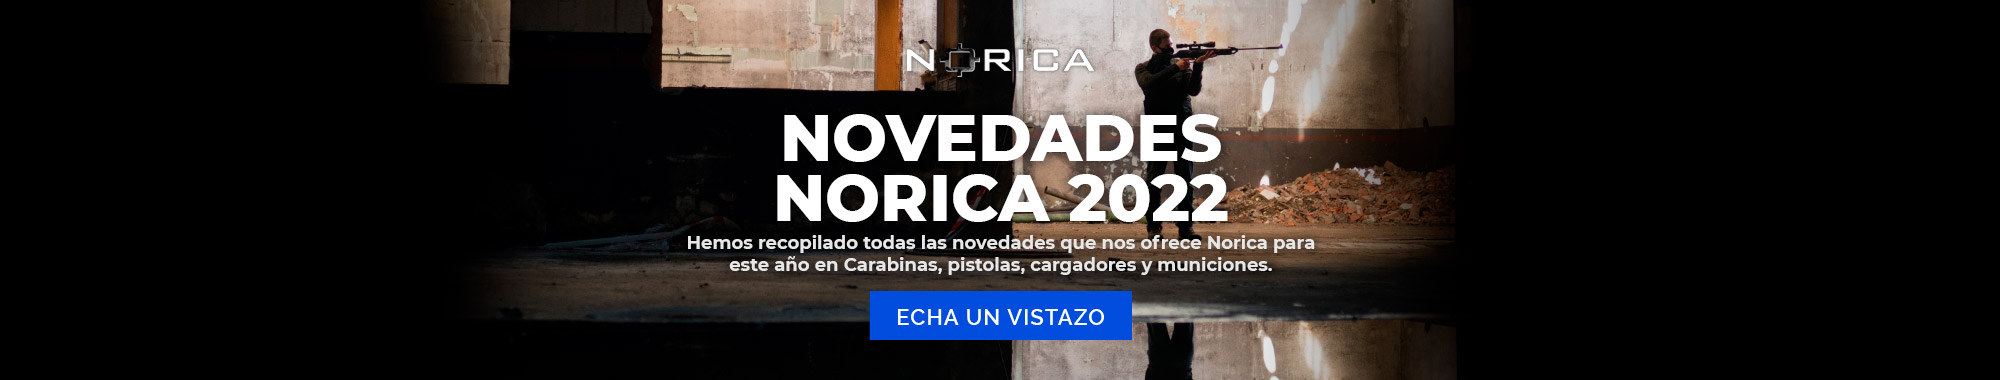 Novedades Norica 2022